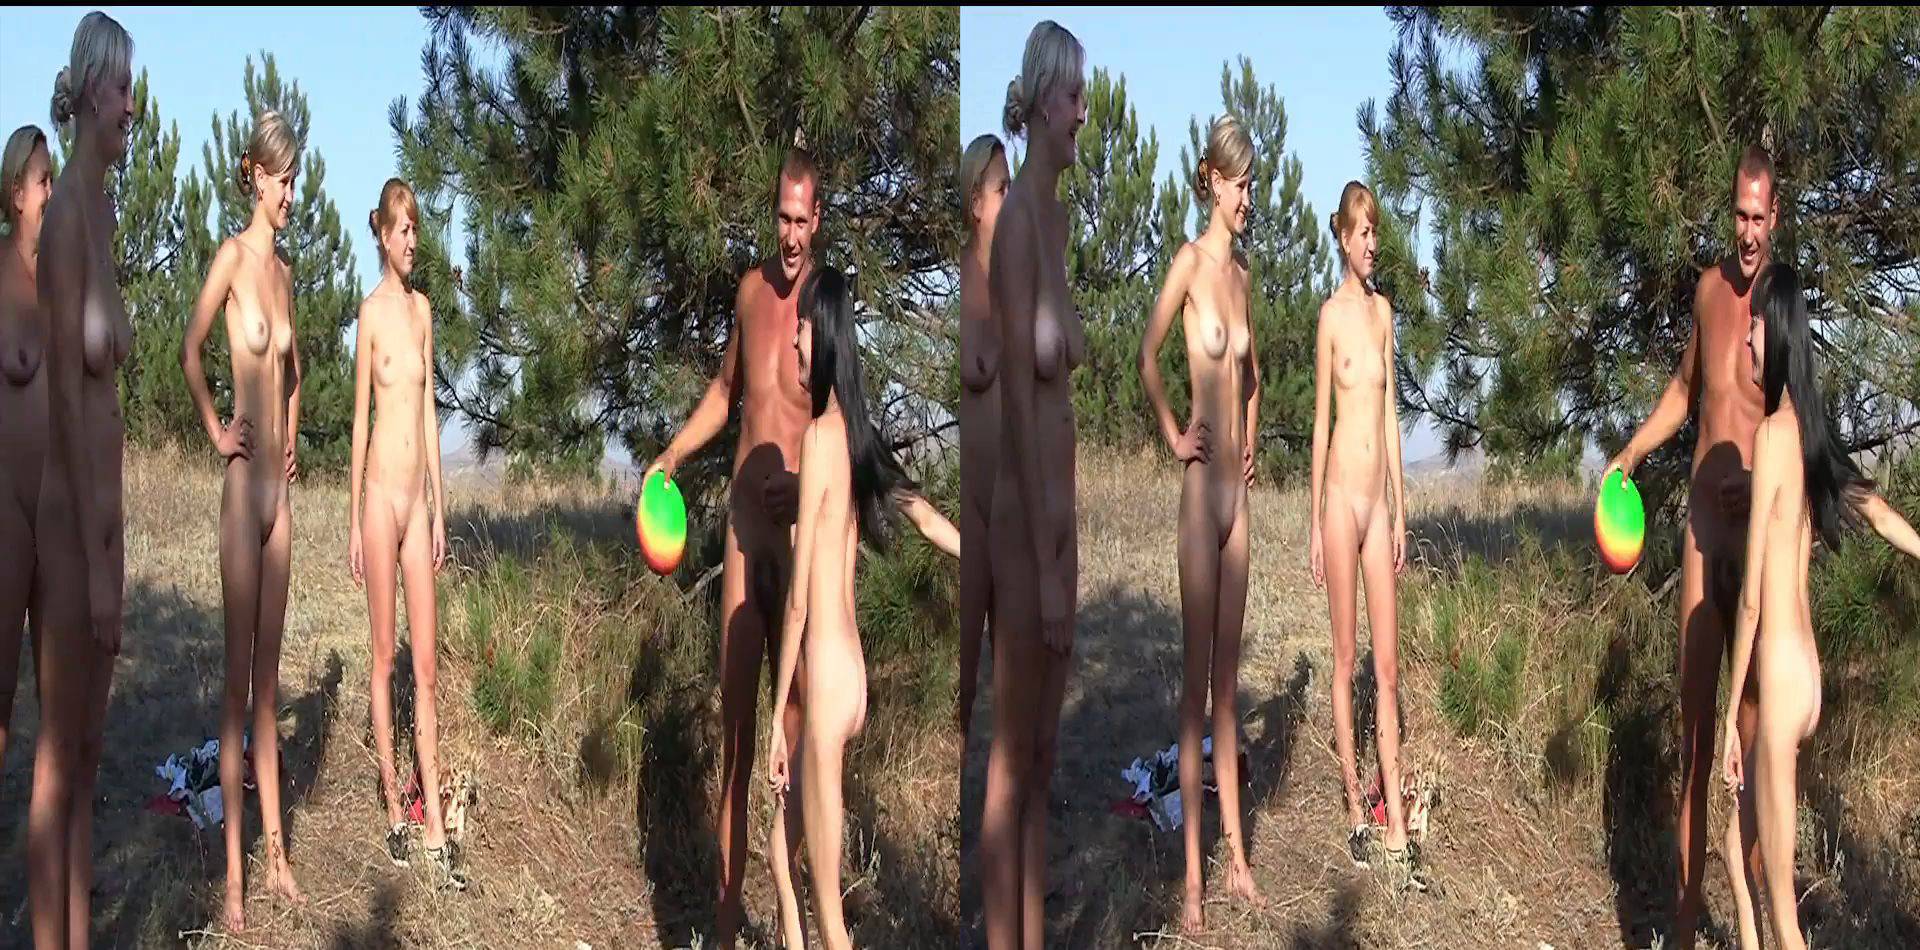 Candid-HD.com 3D Nudist Adventure - 2